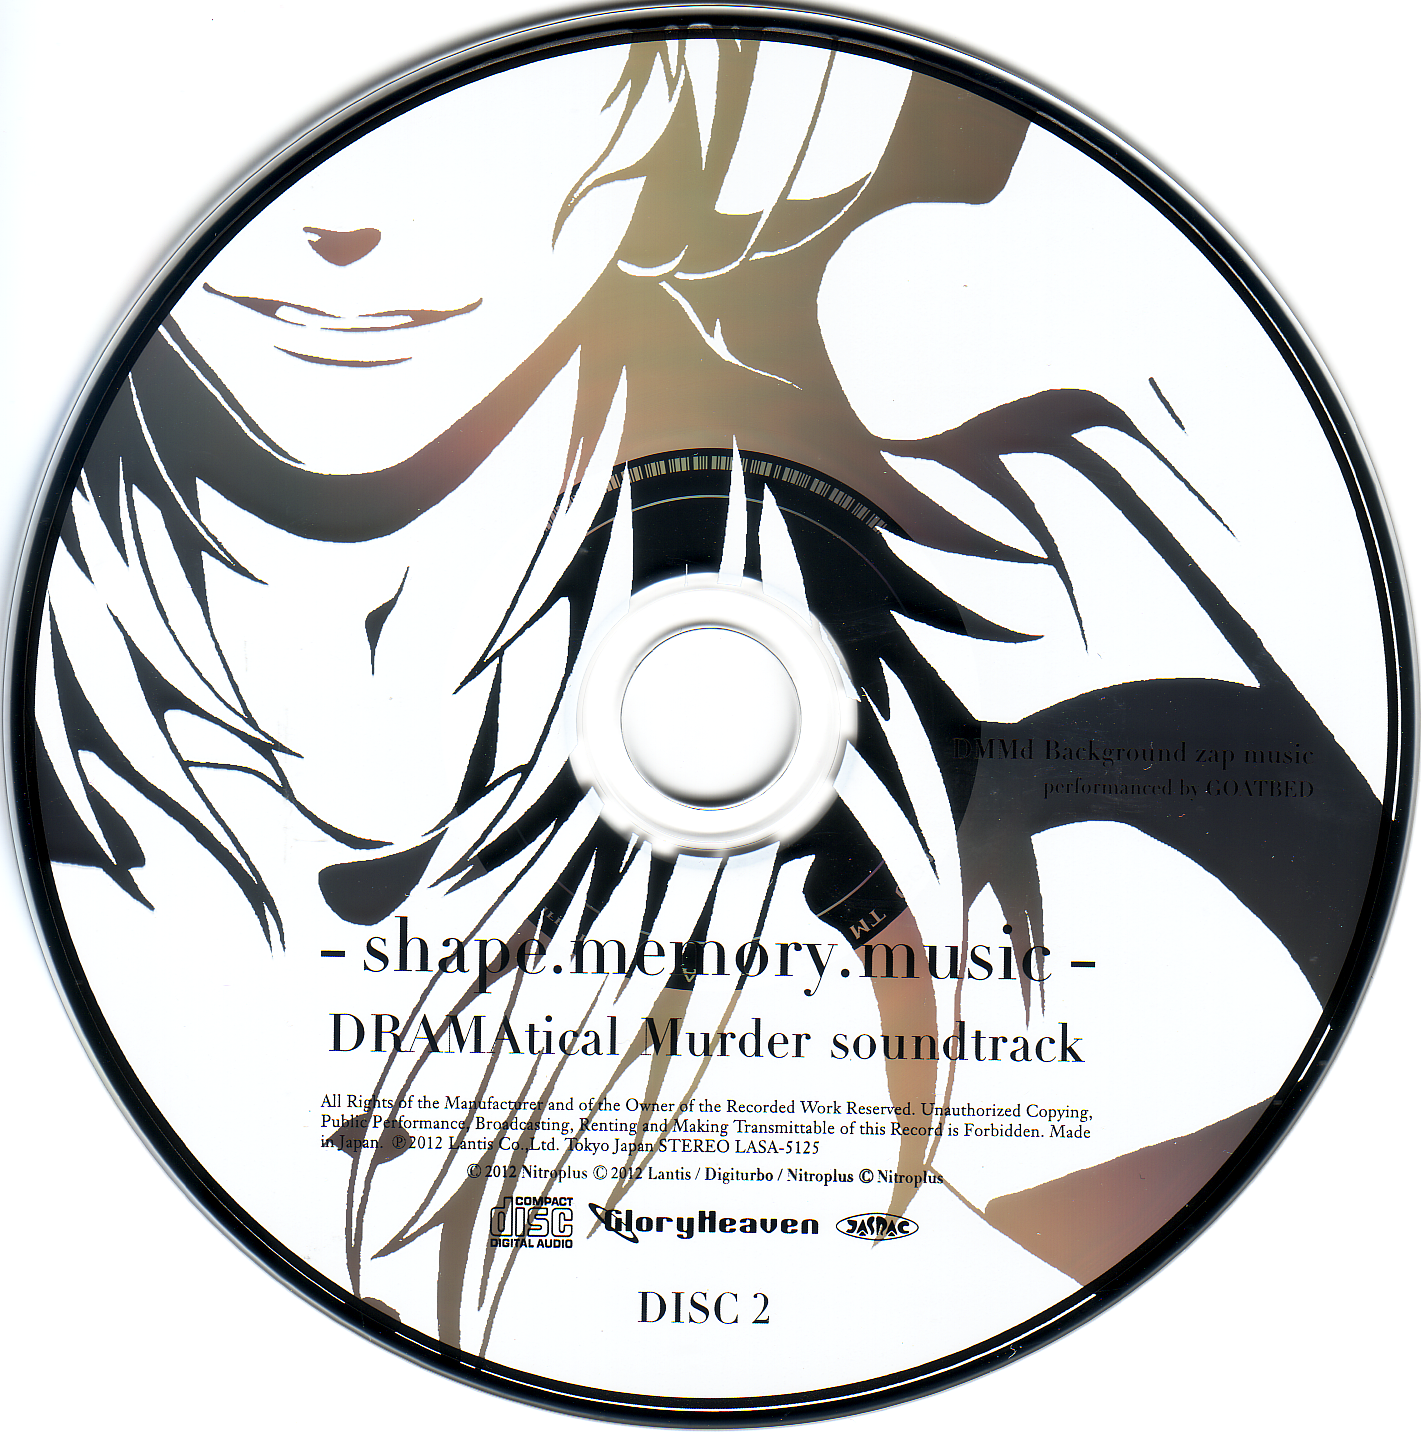 DRAMAtical Murder soundtrack -shape.memory.music- (2012) MP3 